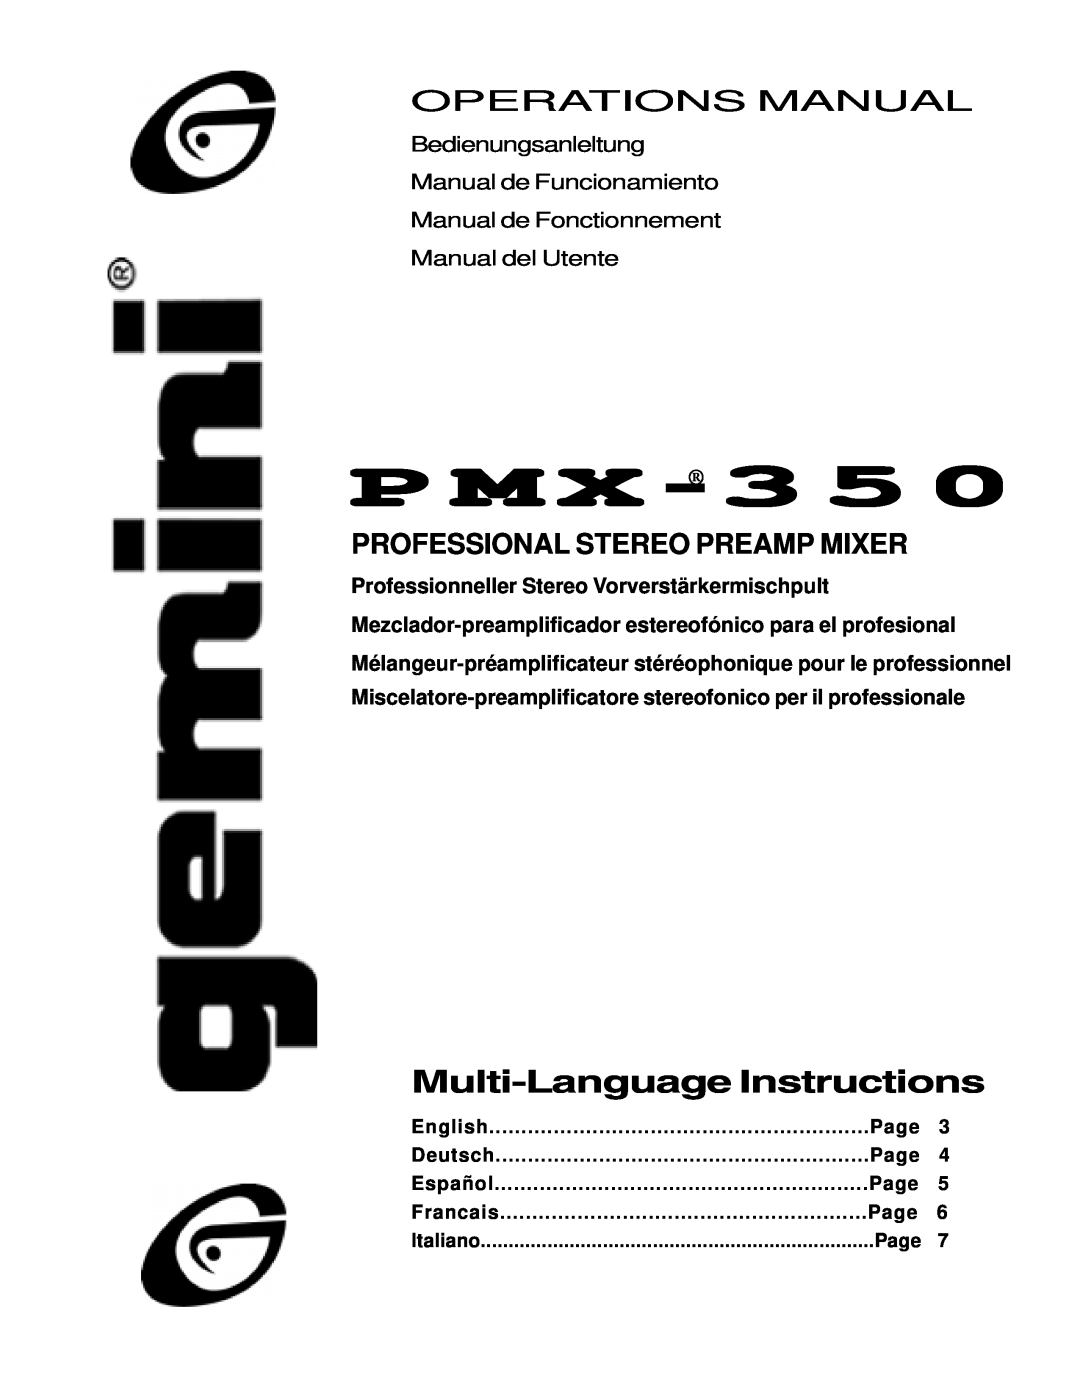 Gemini PMX-350 manual P M X - 3, Multi-LanguageInstructions, Operations Manual, Professional Stereo Preamp Mixer 